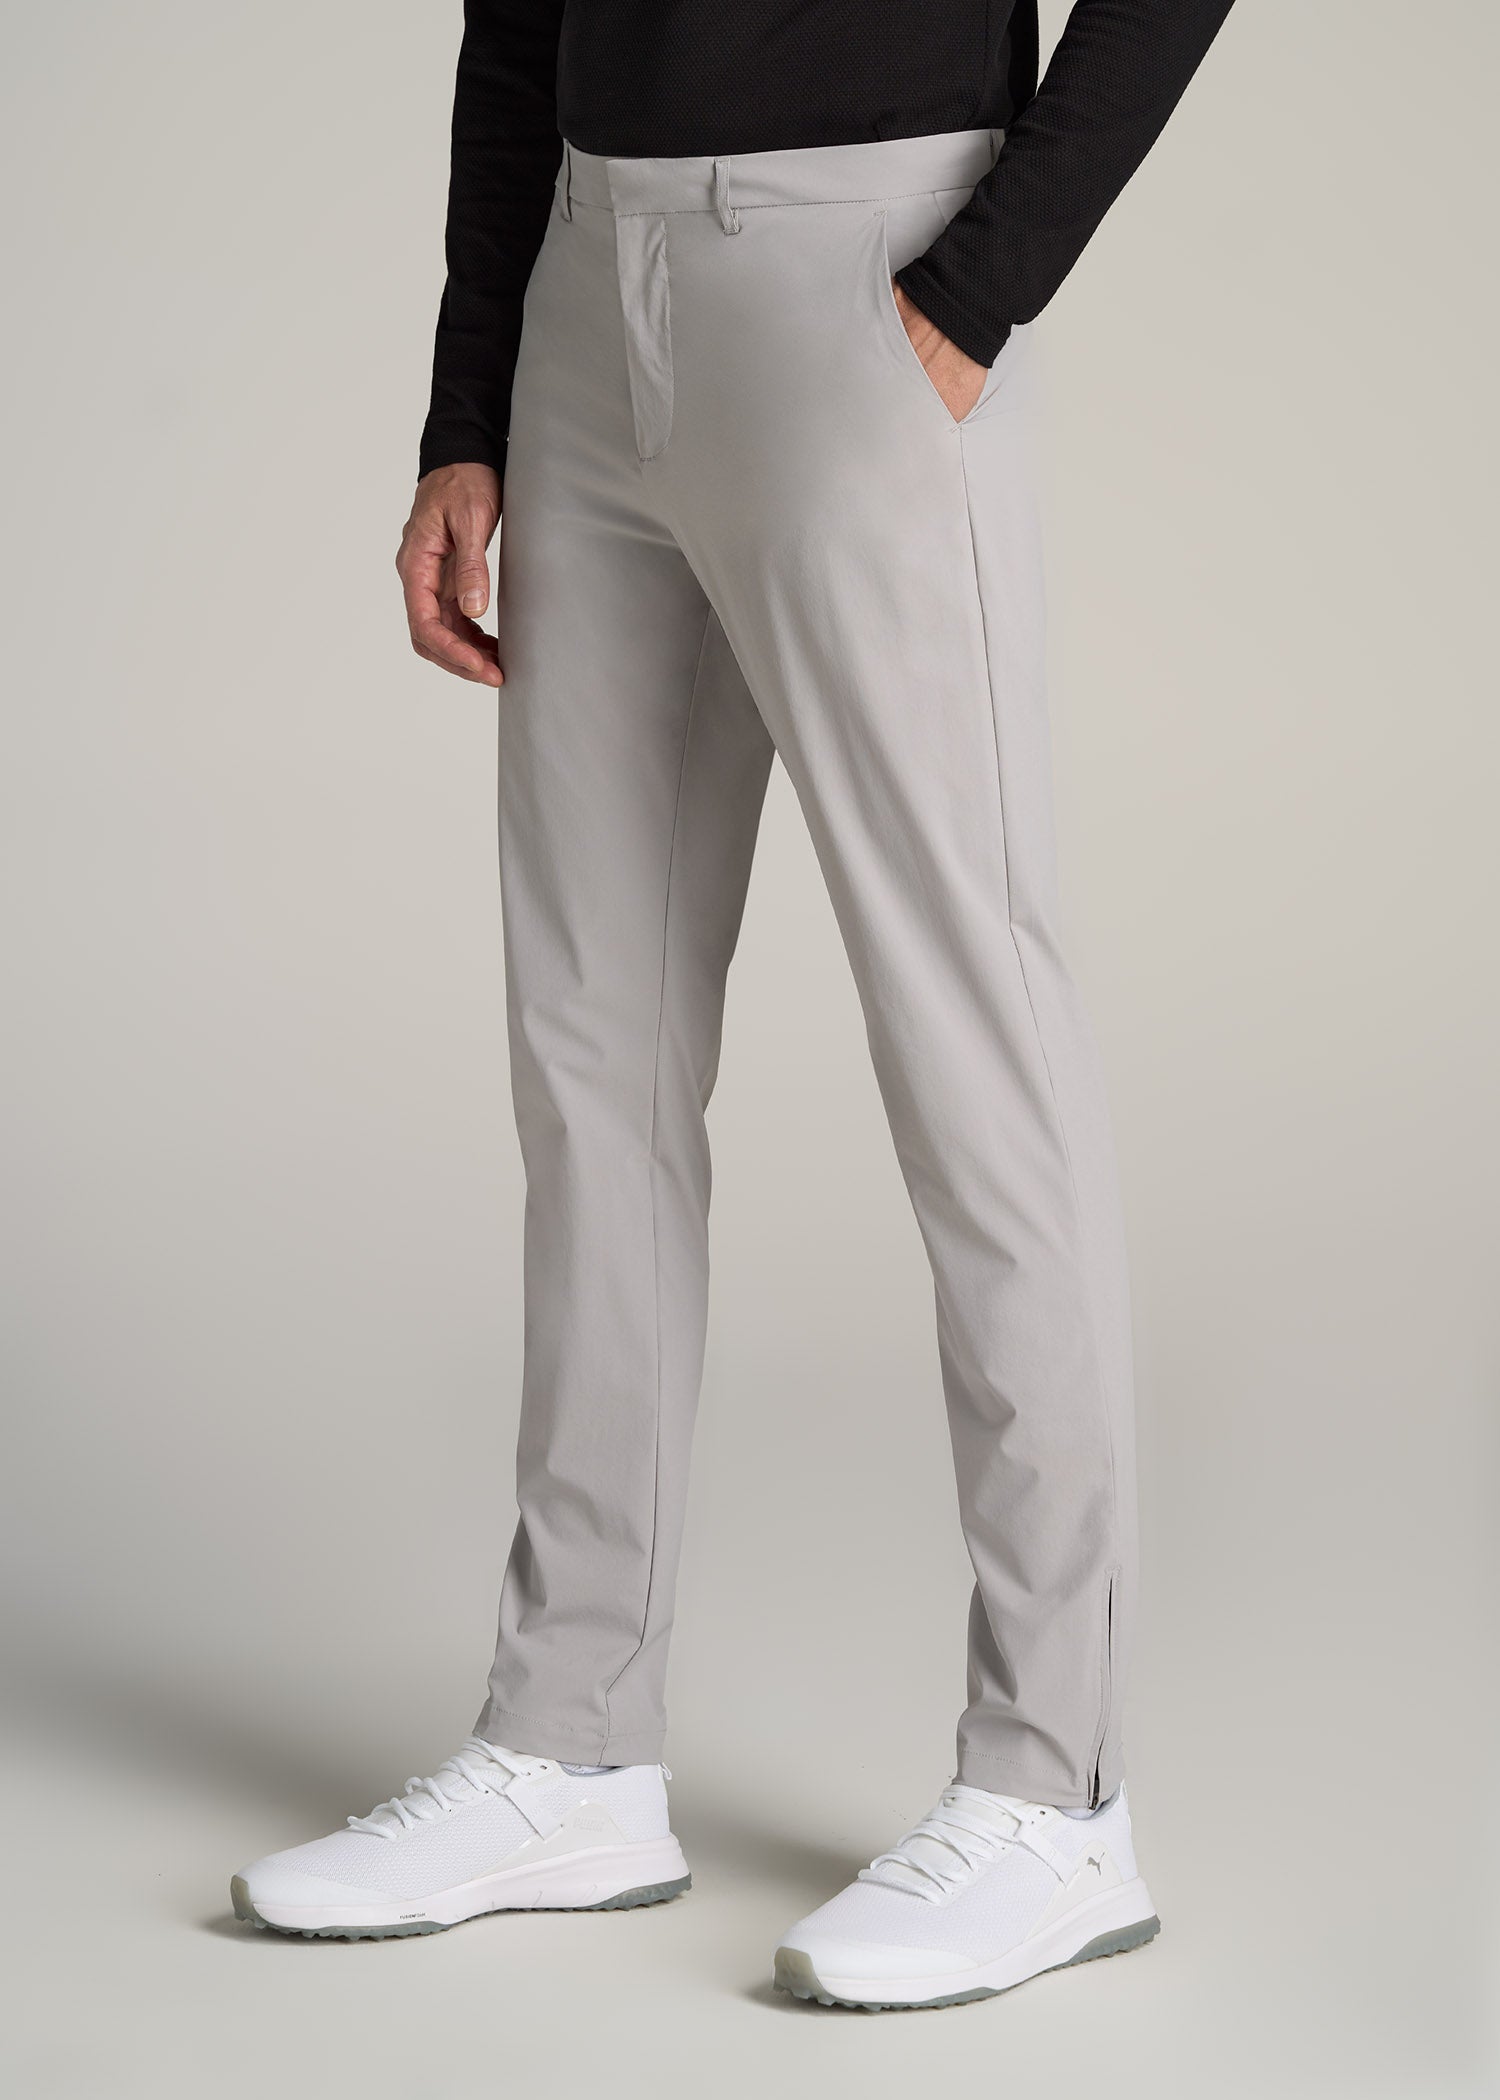 Buy Peter England Men White Colorblock Casual Jacket Track Pants (Set of 2)  online